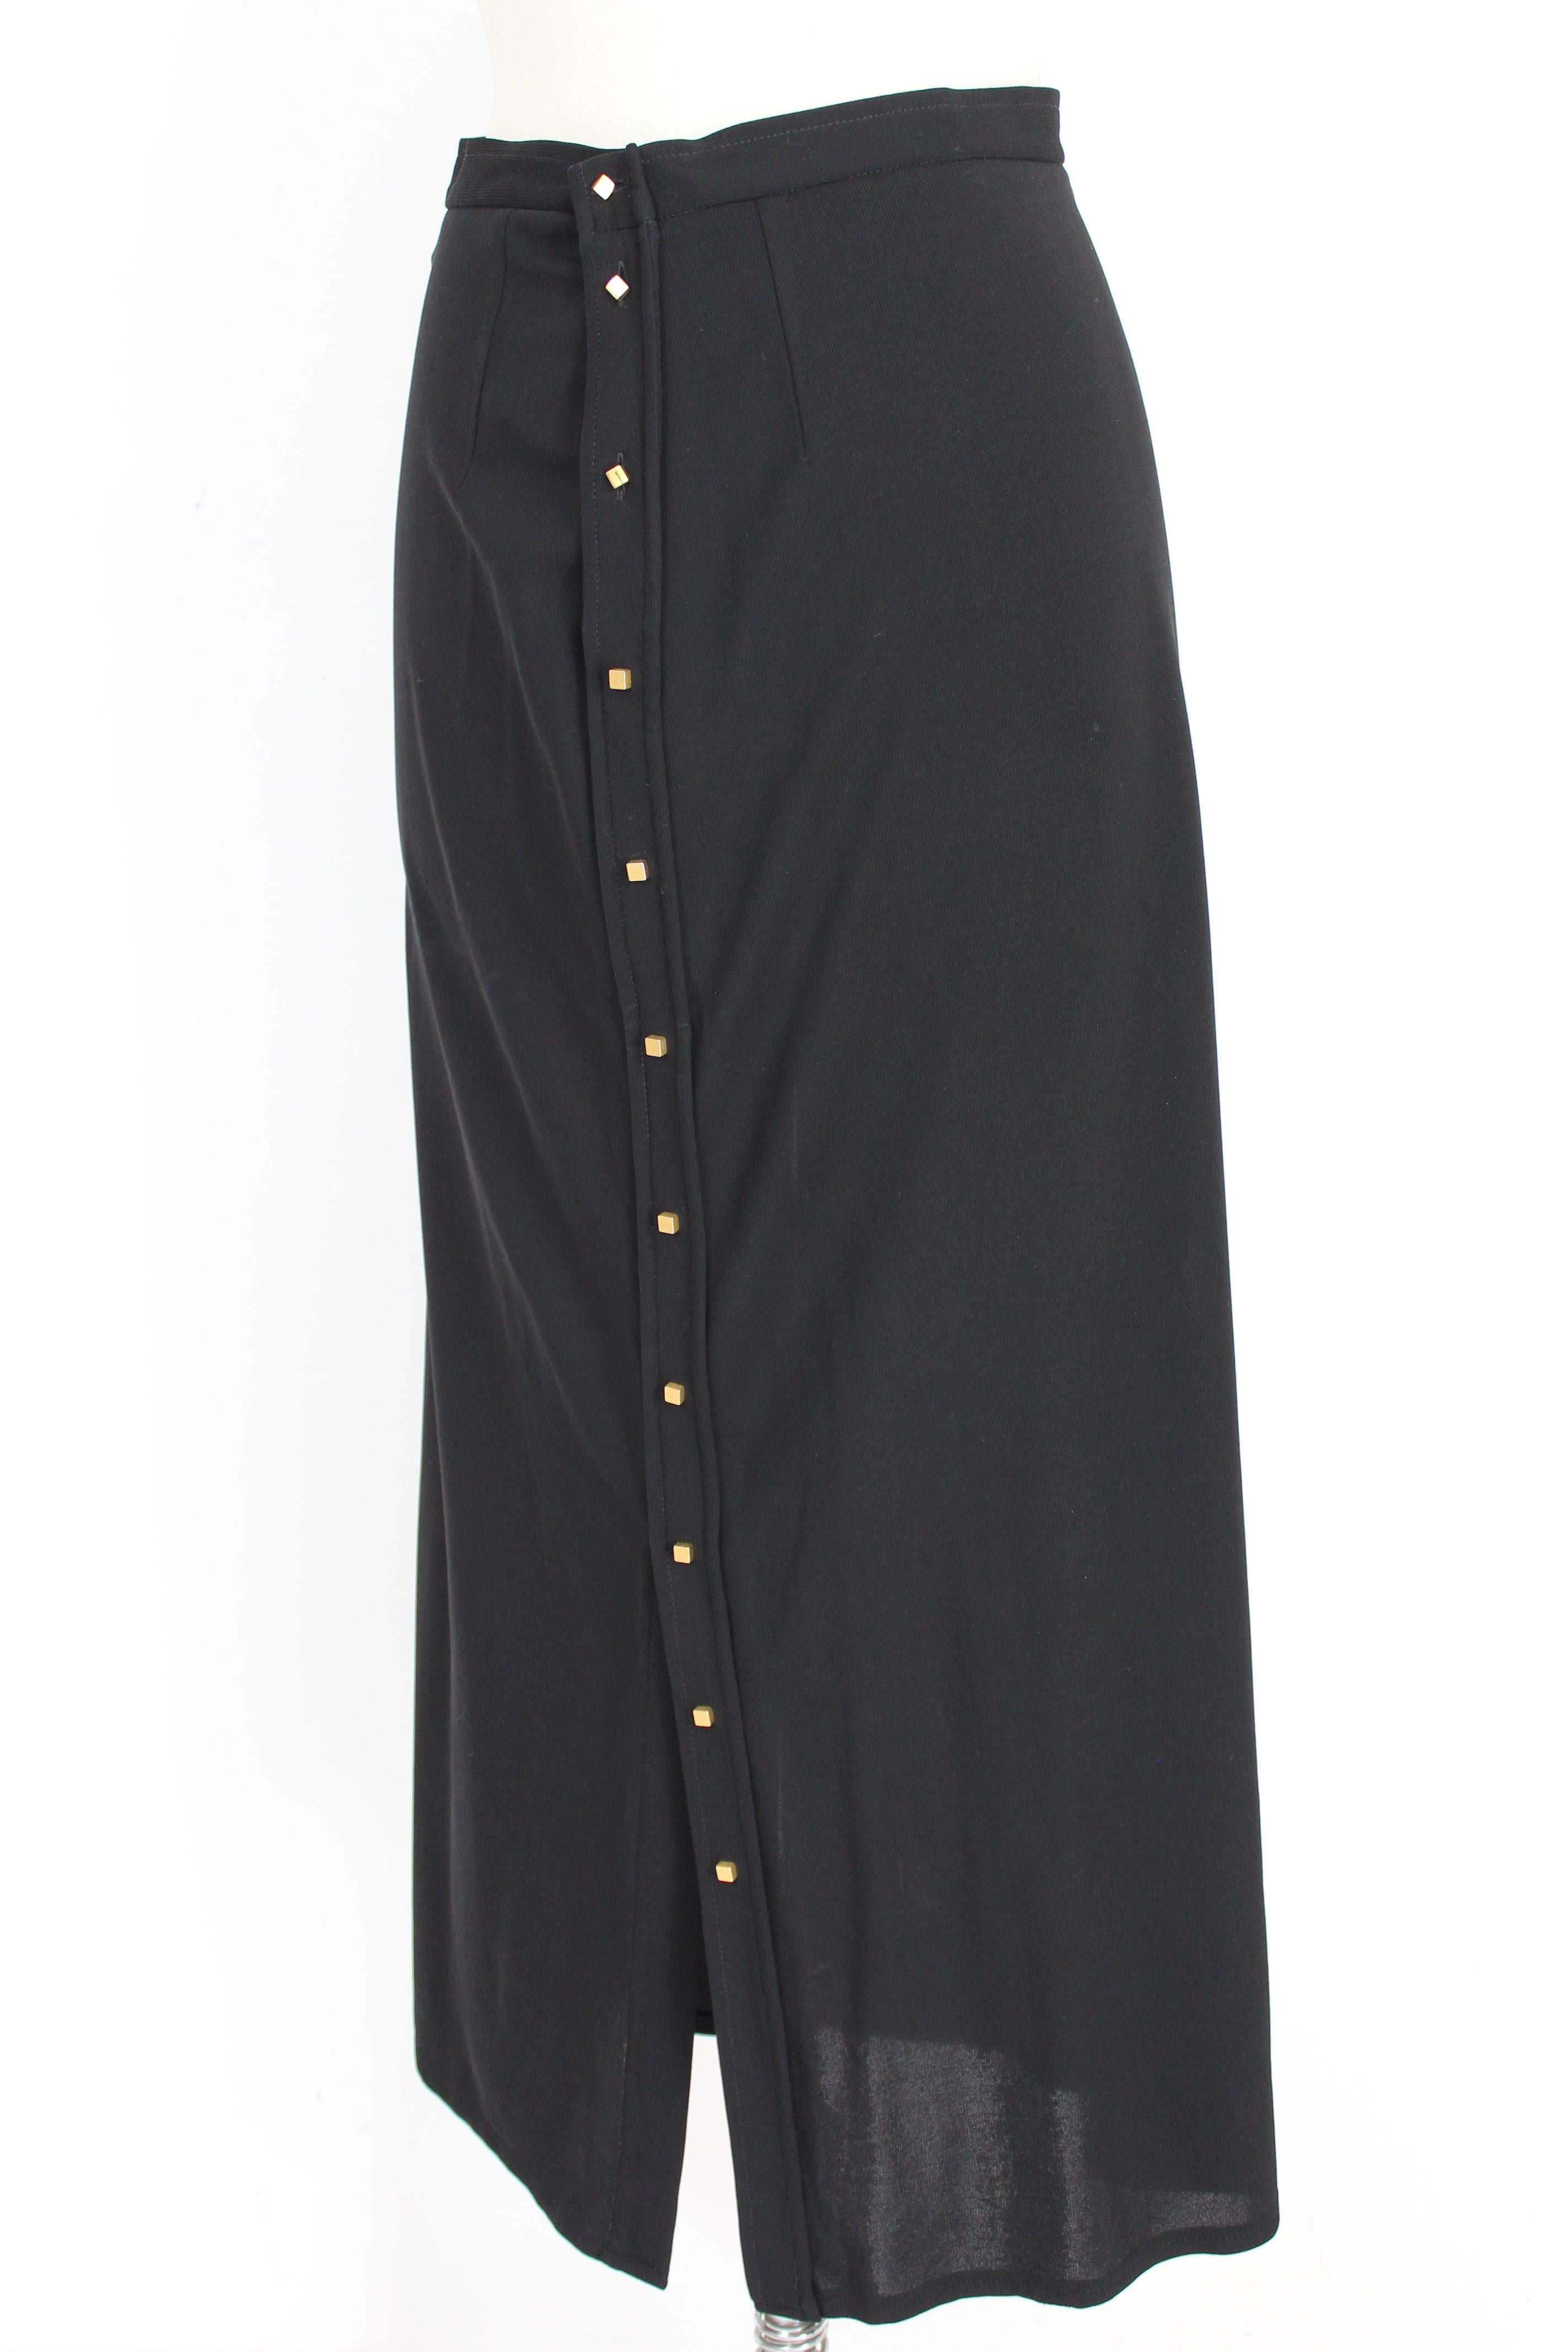 Genny Black Gold Viscose Evening Suit Skirt and Jacket 4